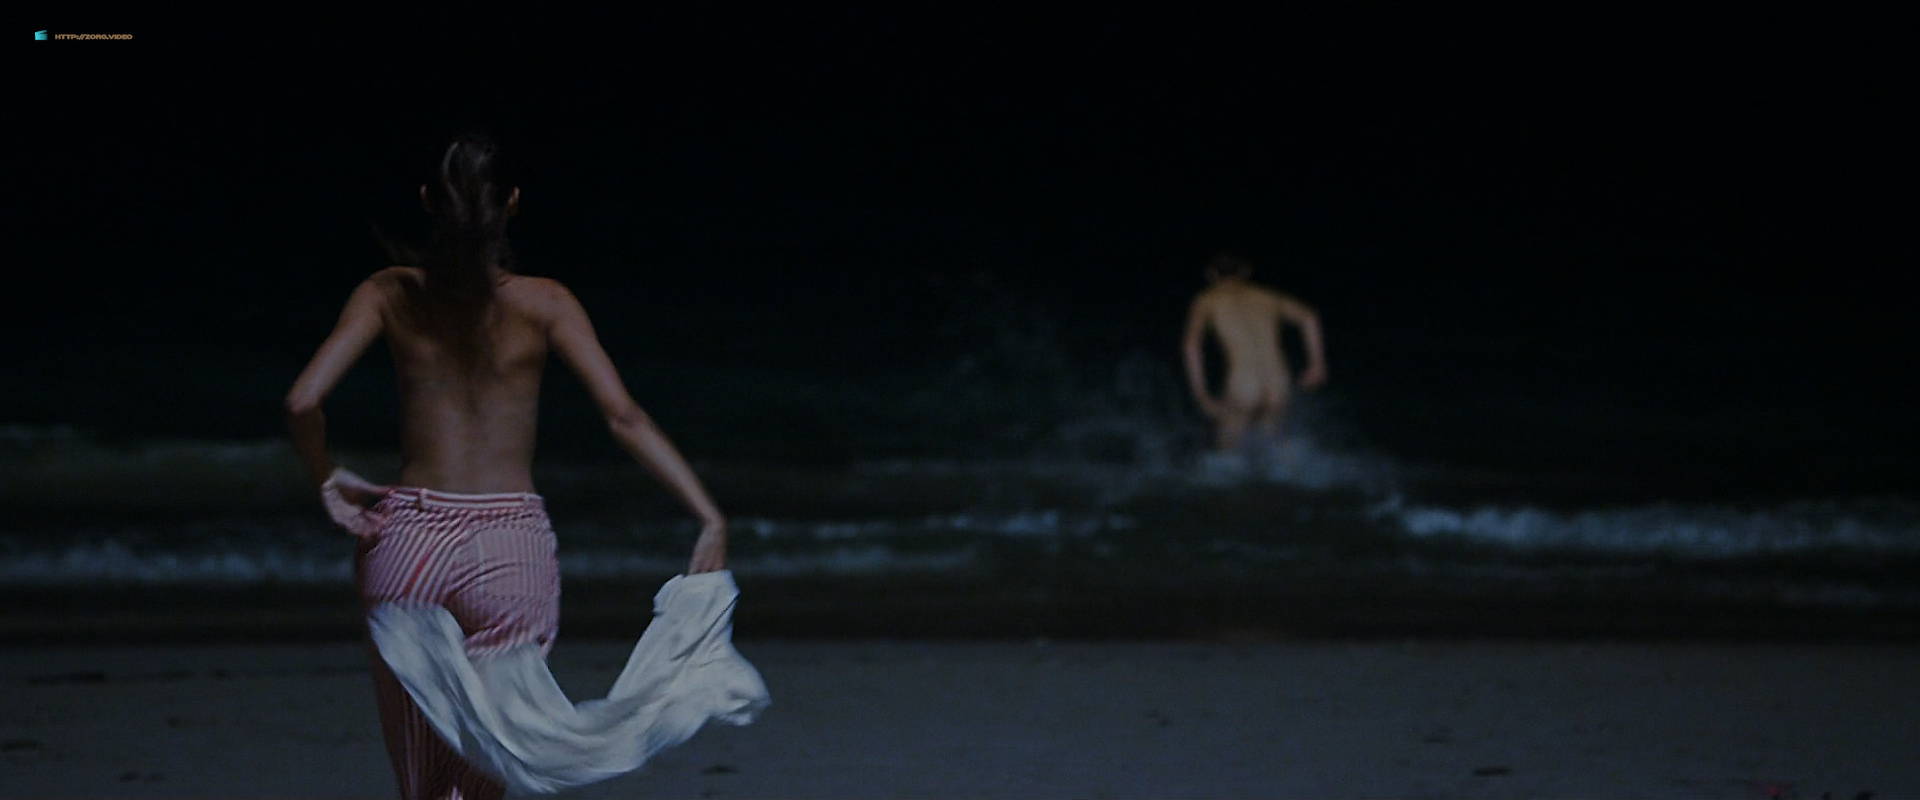 Minka Kelly nude butt Joely Richardson nude and skinny dipping - Papa Hemingway in Cuba (2015) HD 1080p web (9)